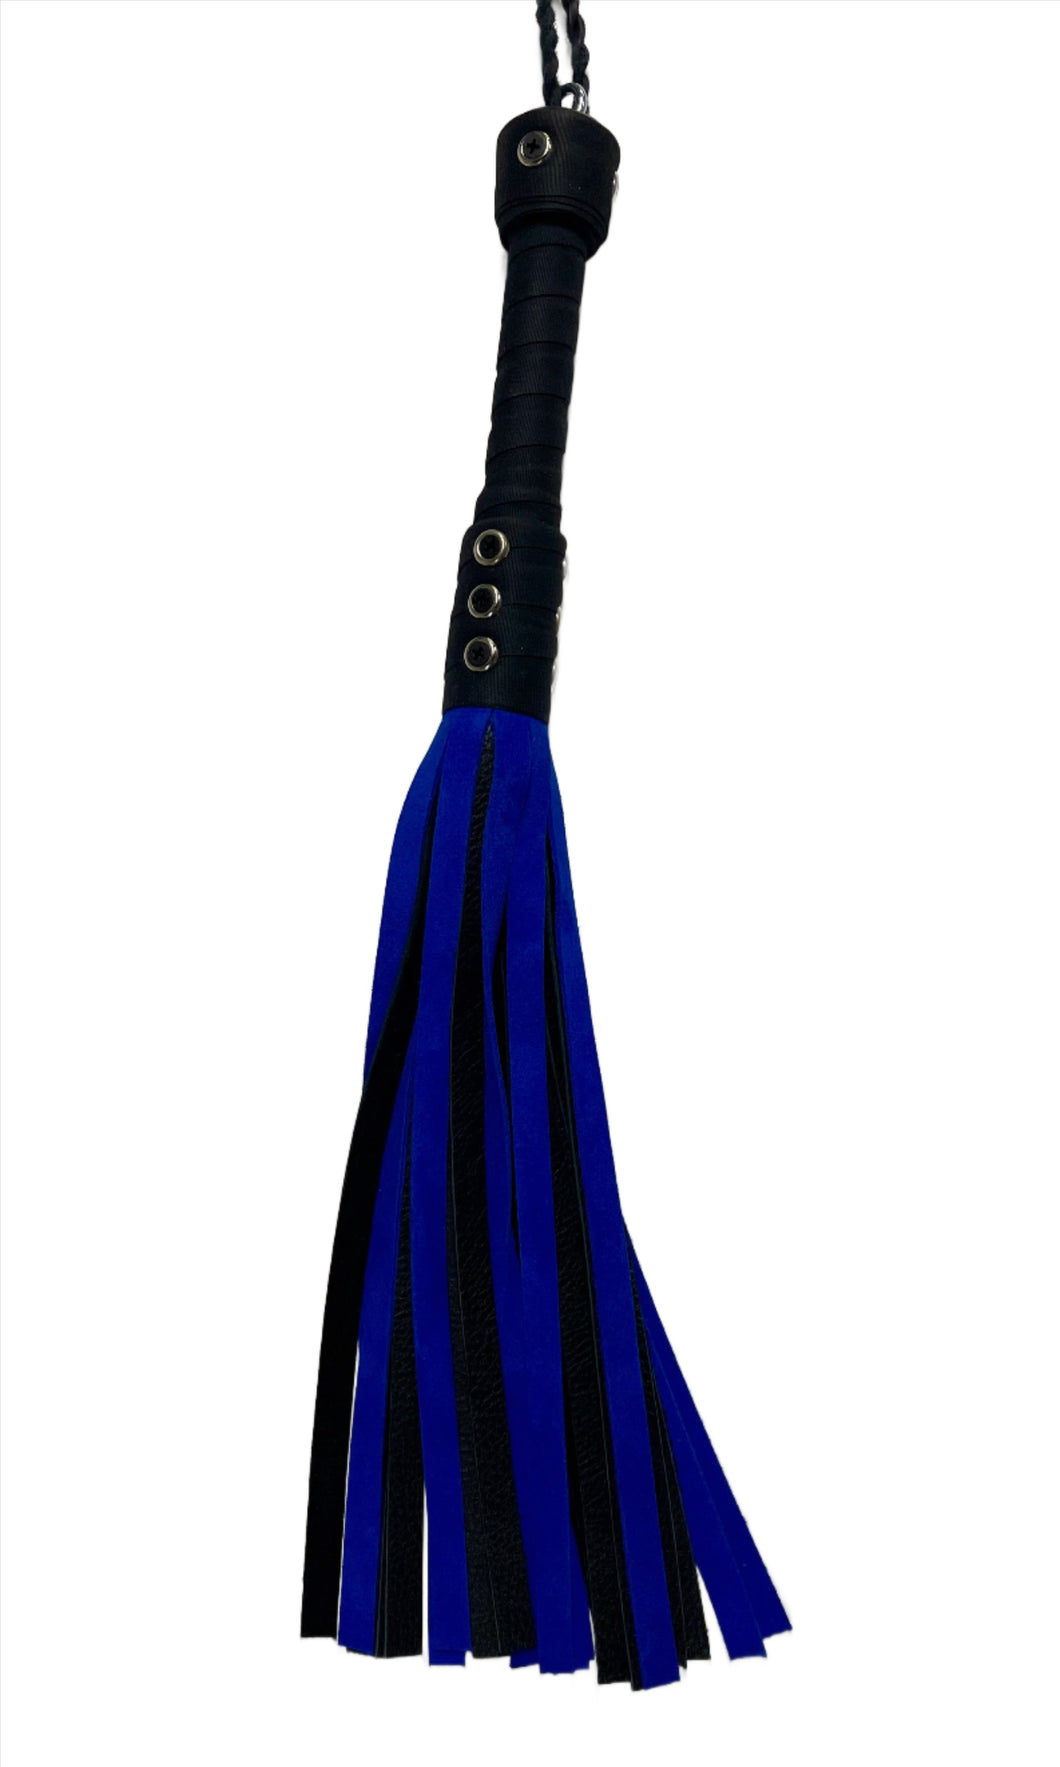 Bare Leatherworks - Midsize Cow Flogger (Blue/Black)